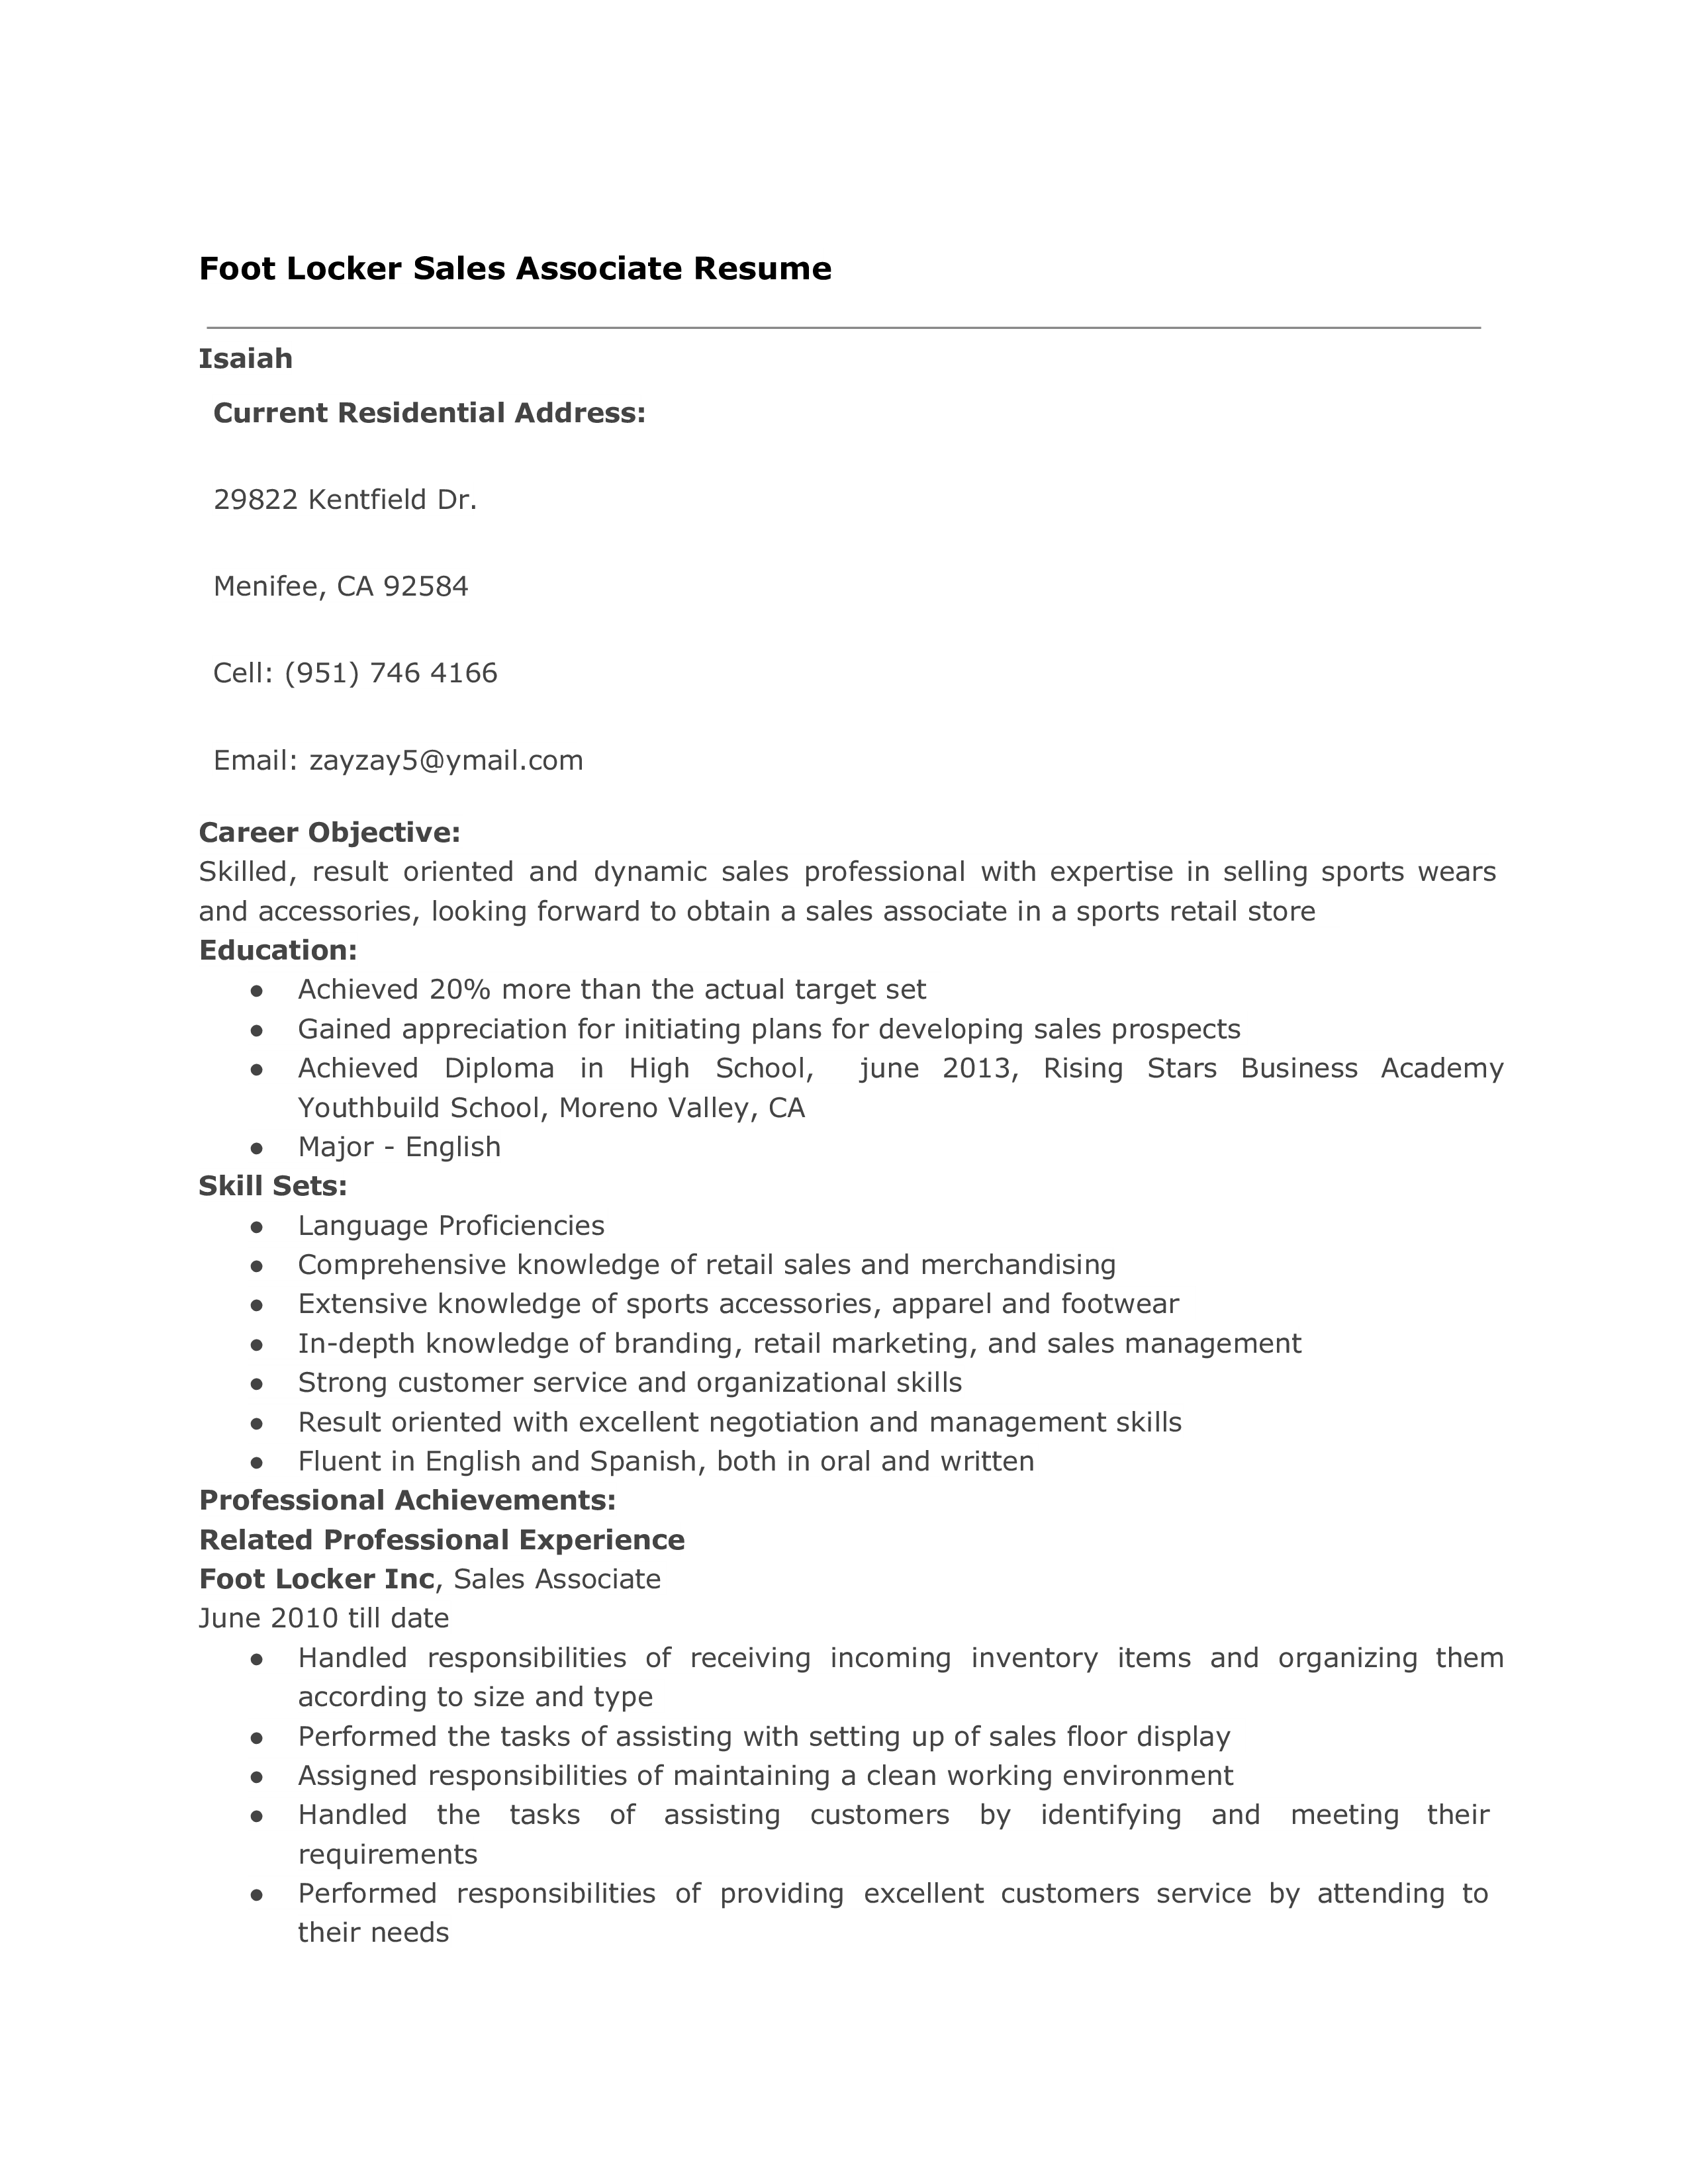 Foot Locker Sales Associate Resume main image